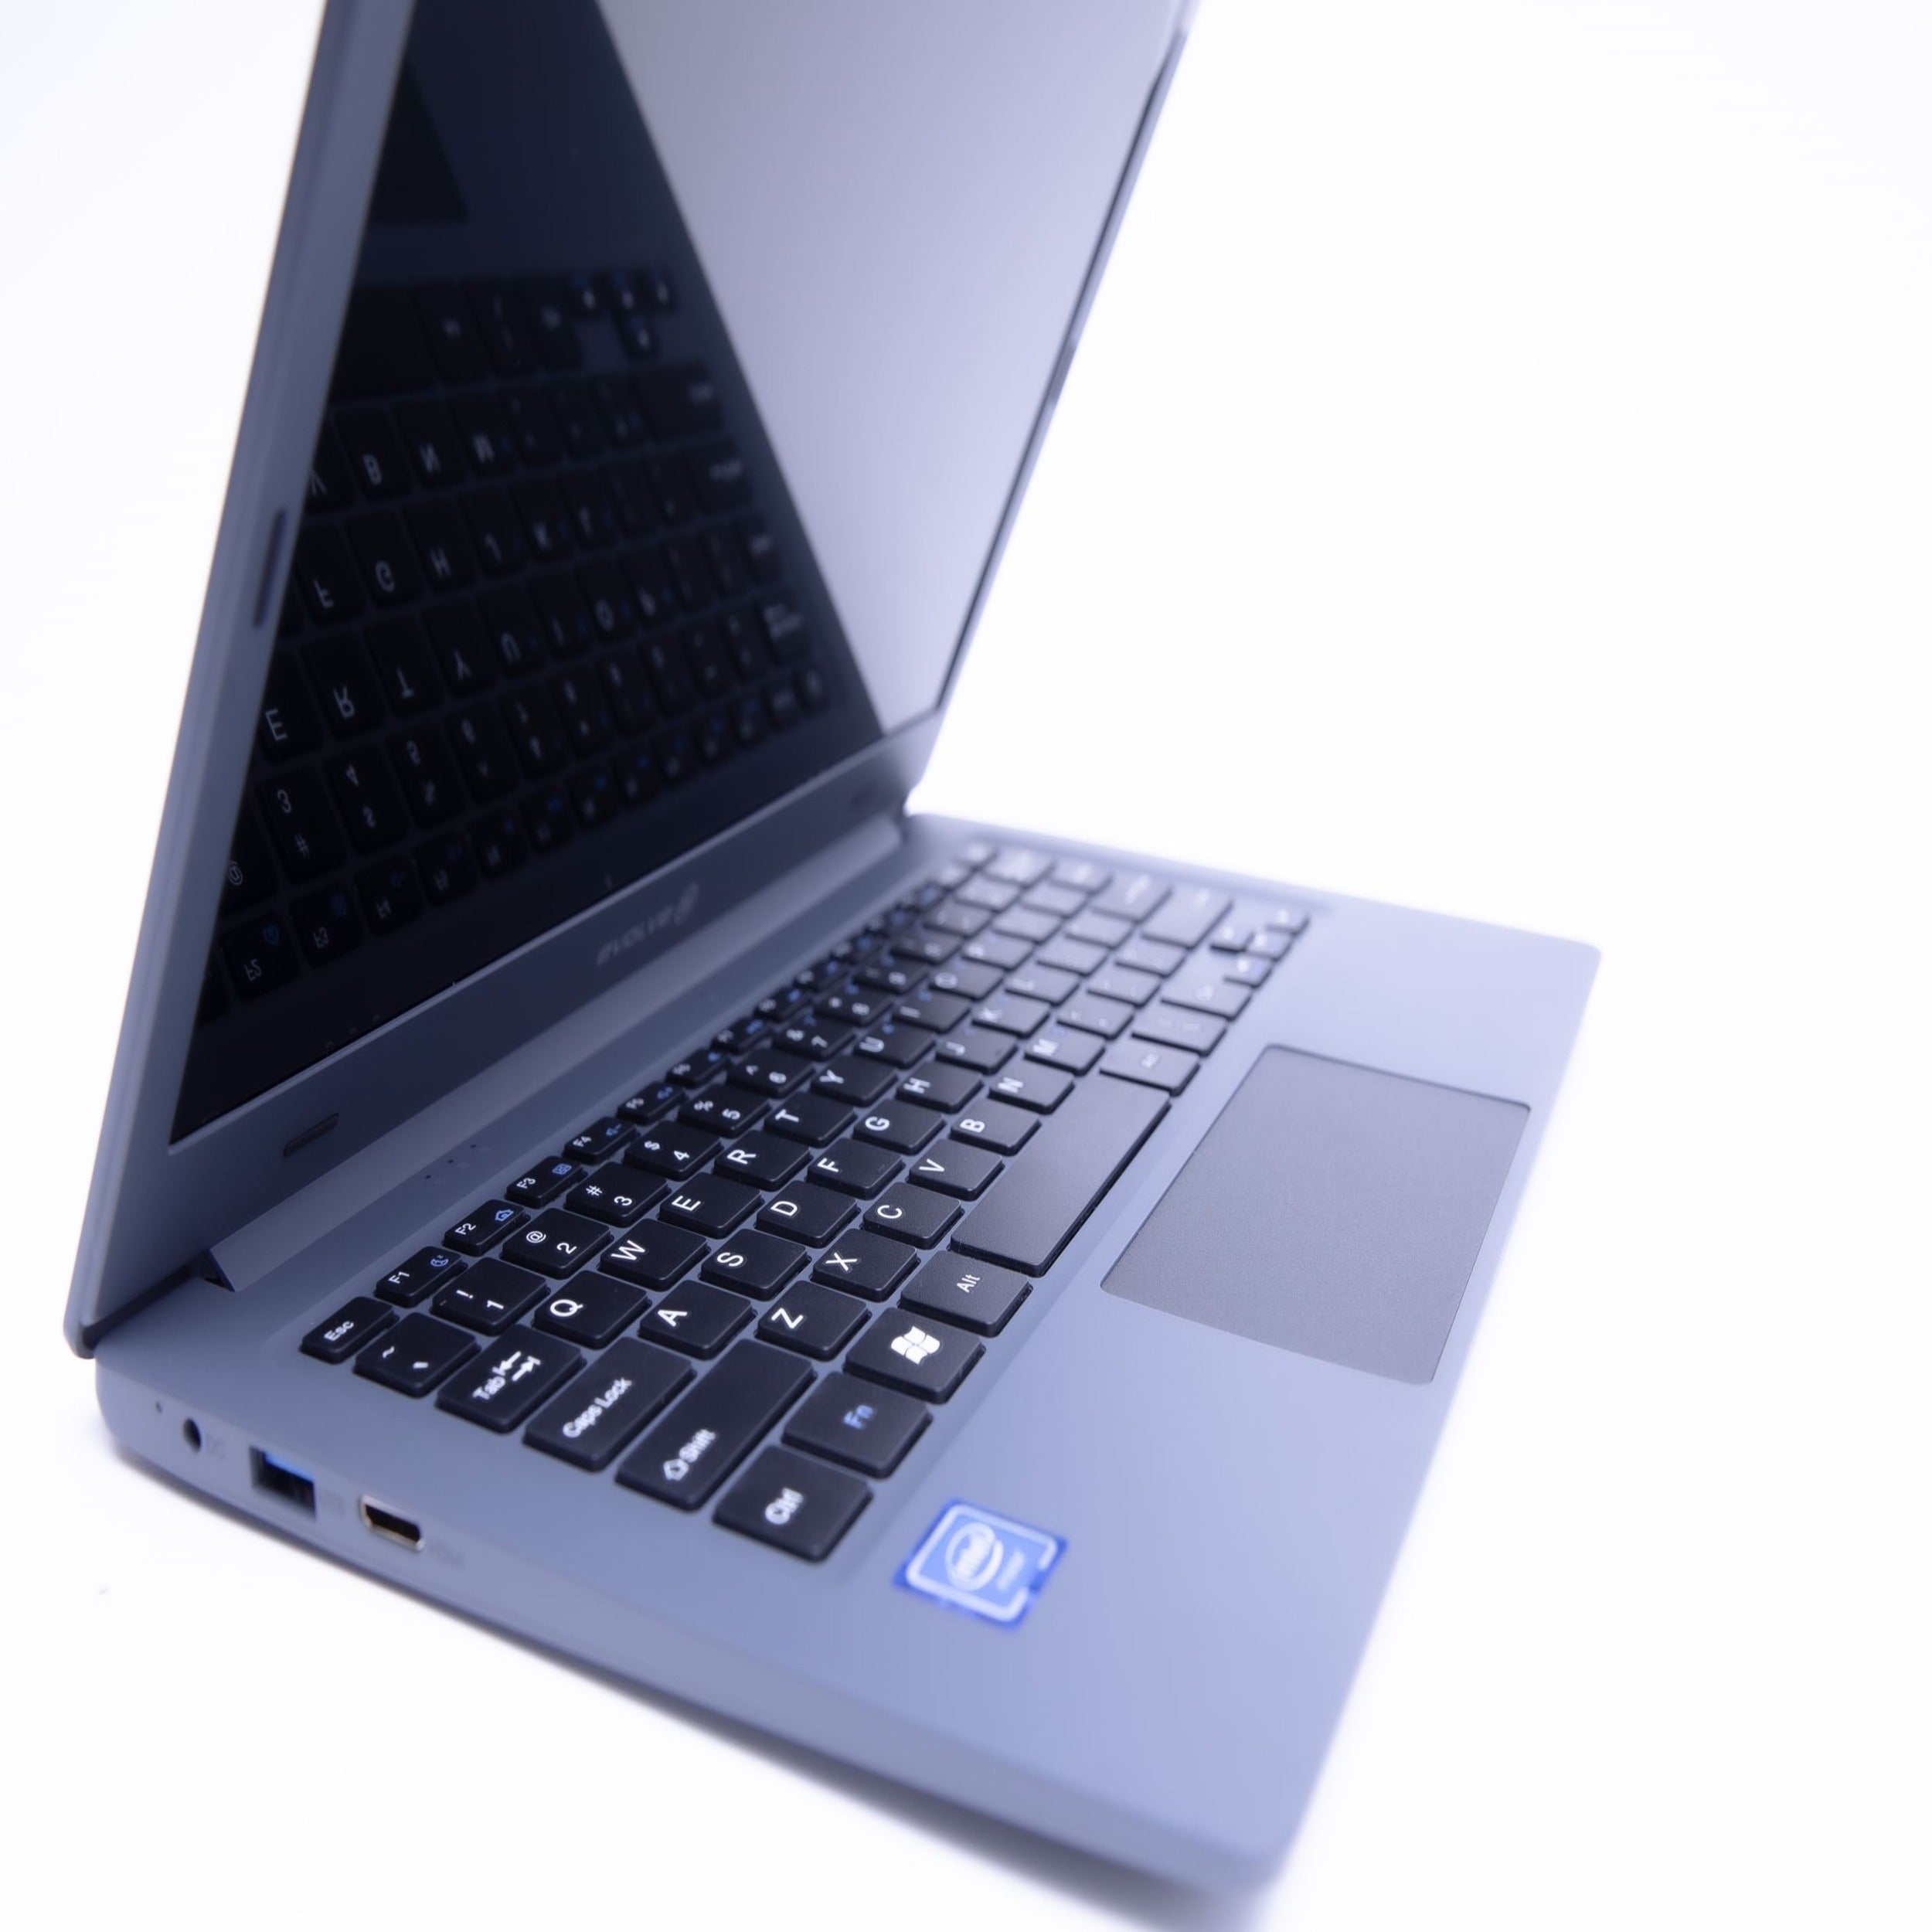 Evolve III Laptop